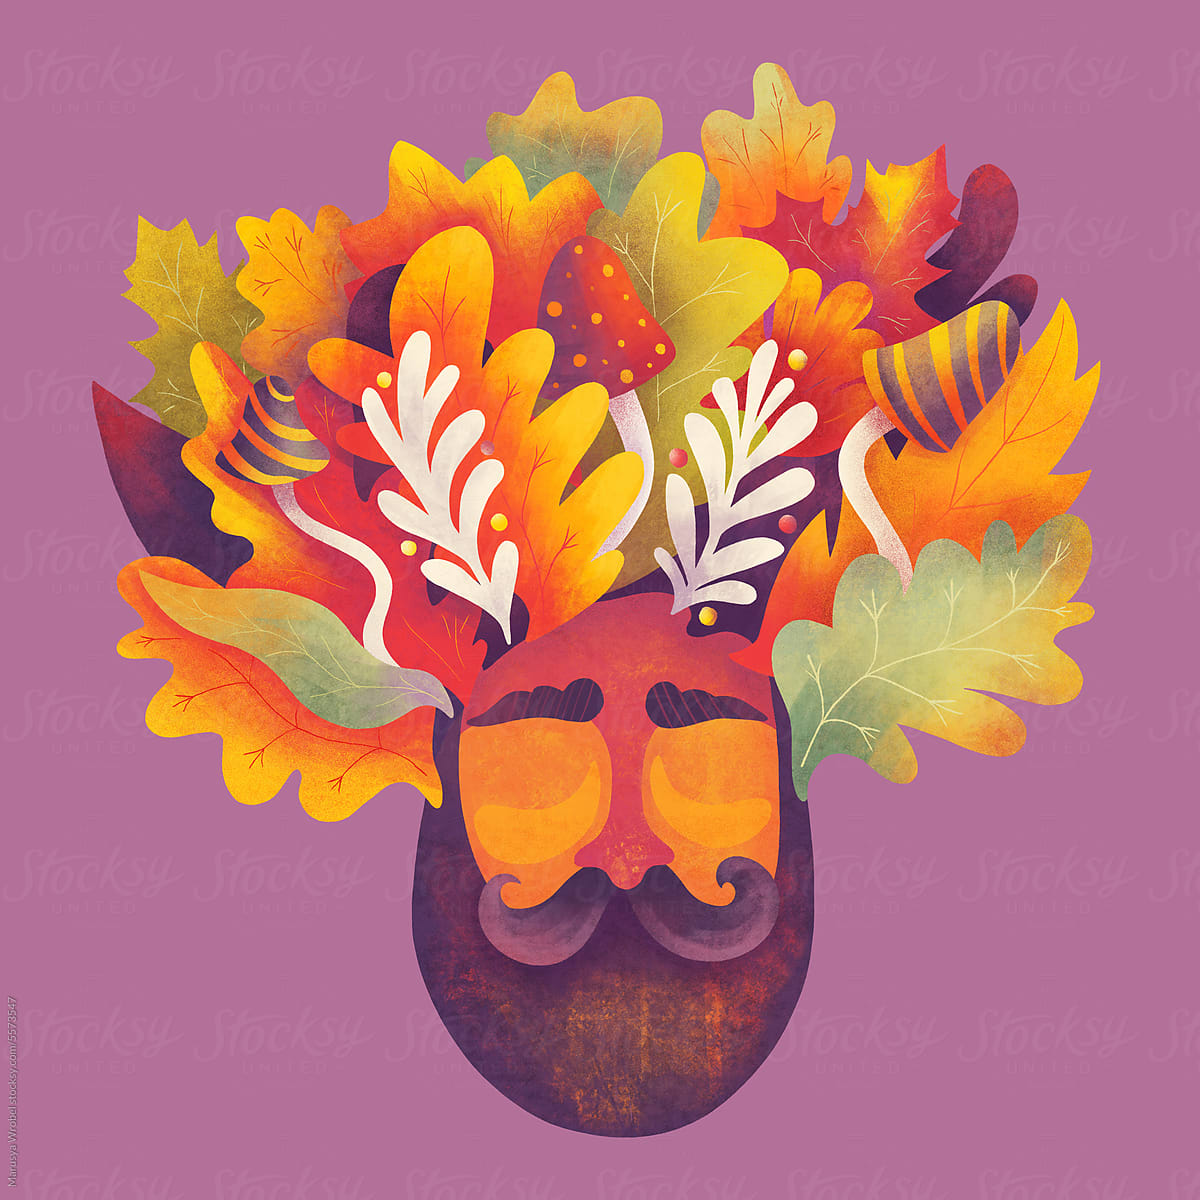 Stylish portrait of a man in an autumn wreath